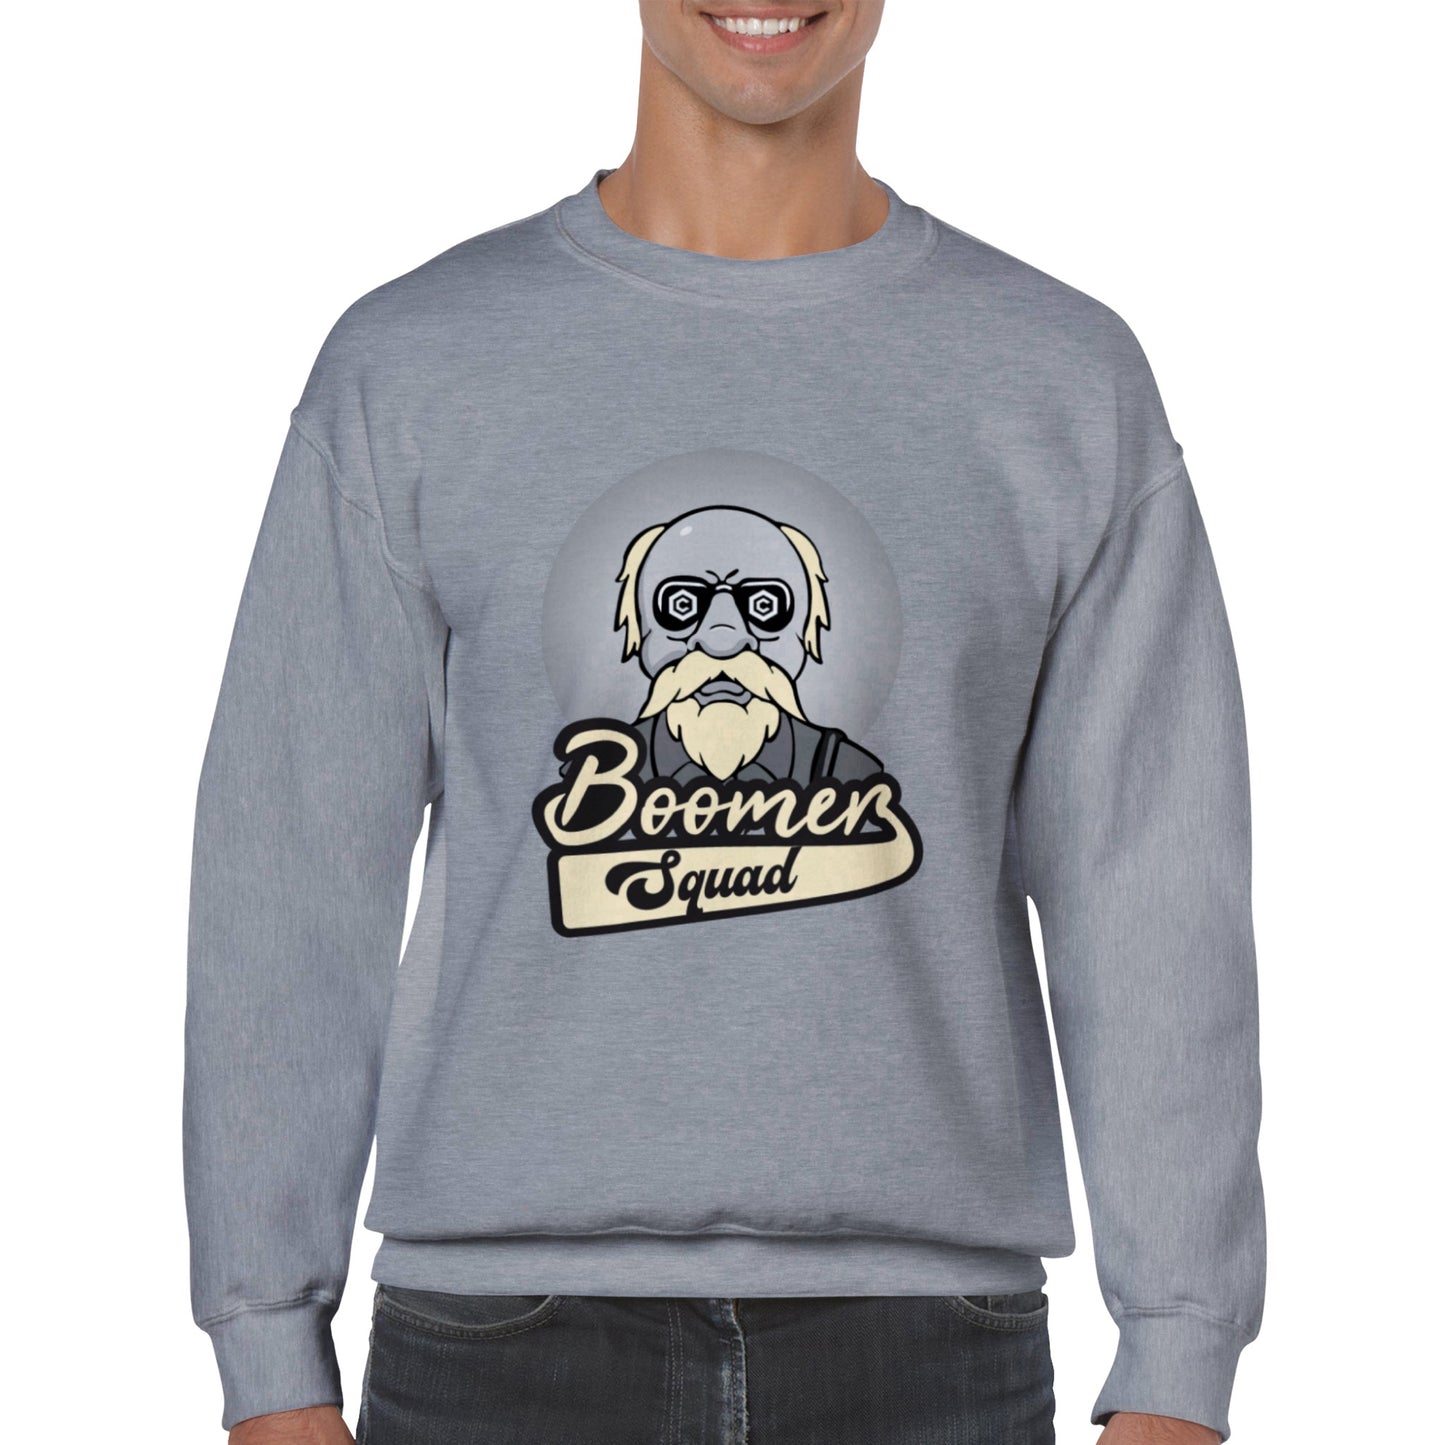 Boomer Squad Classic Unisex Crewneck Sweatshirt